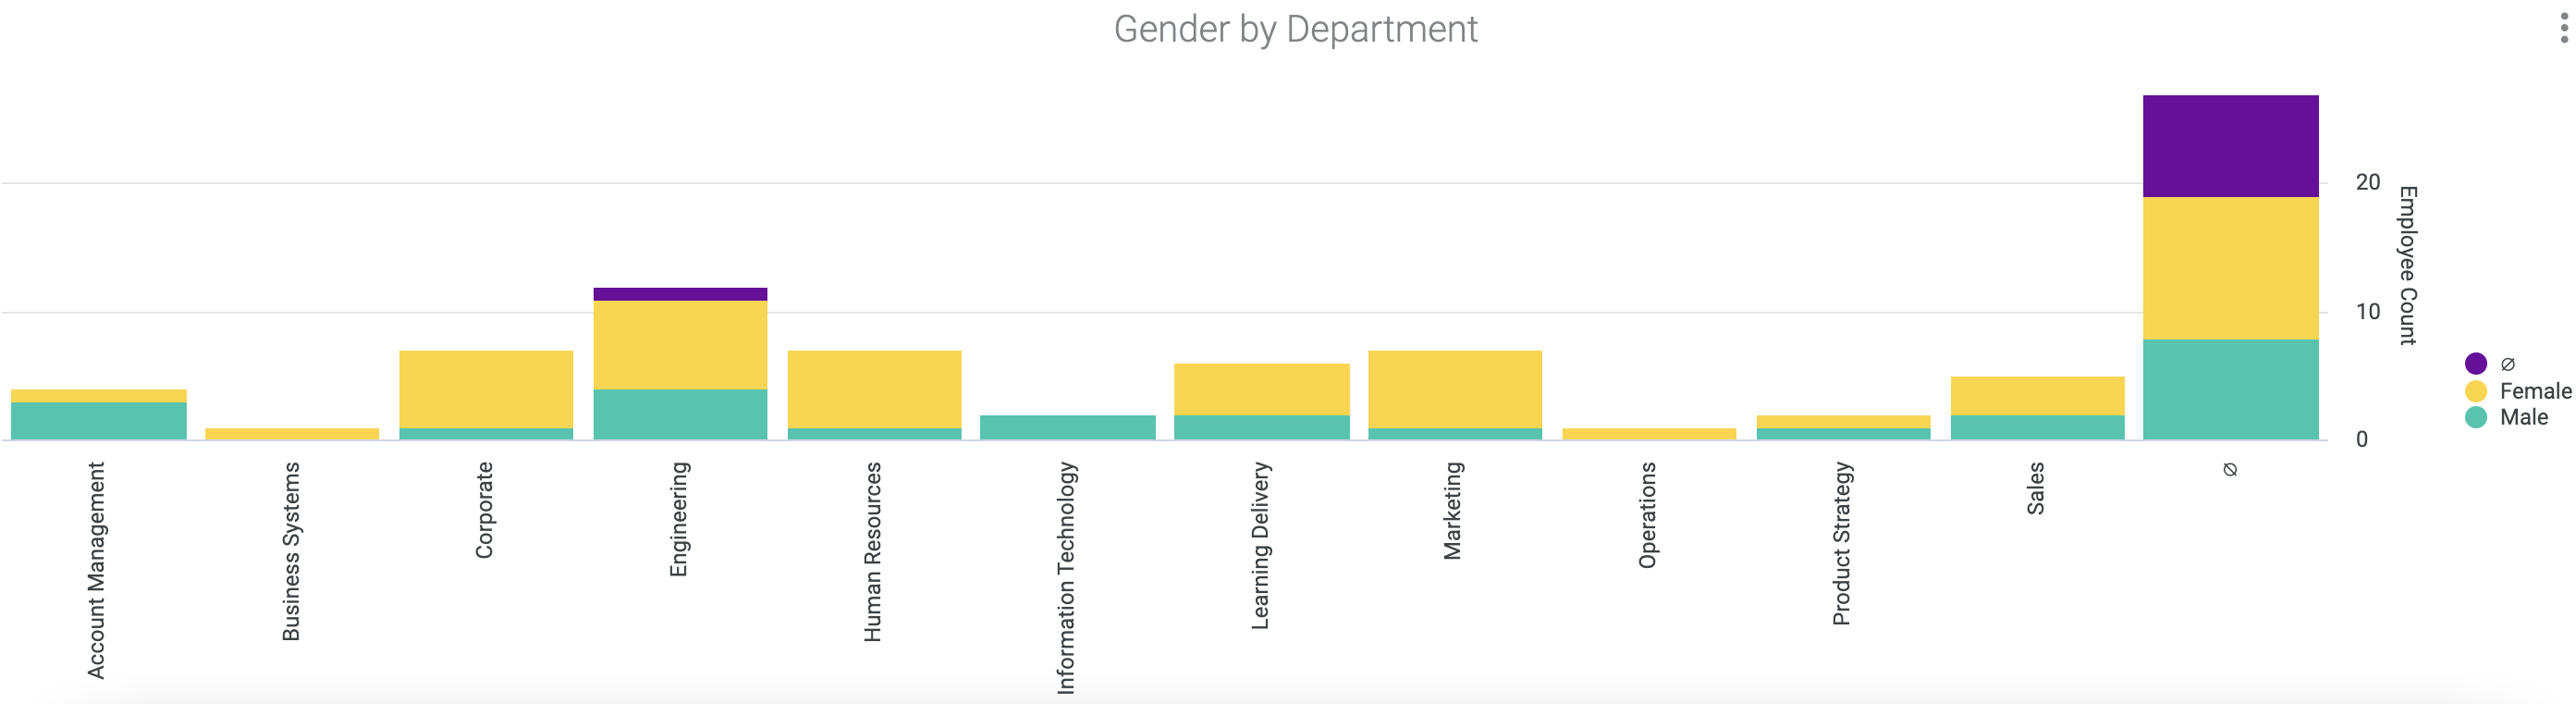 Gender by department